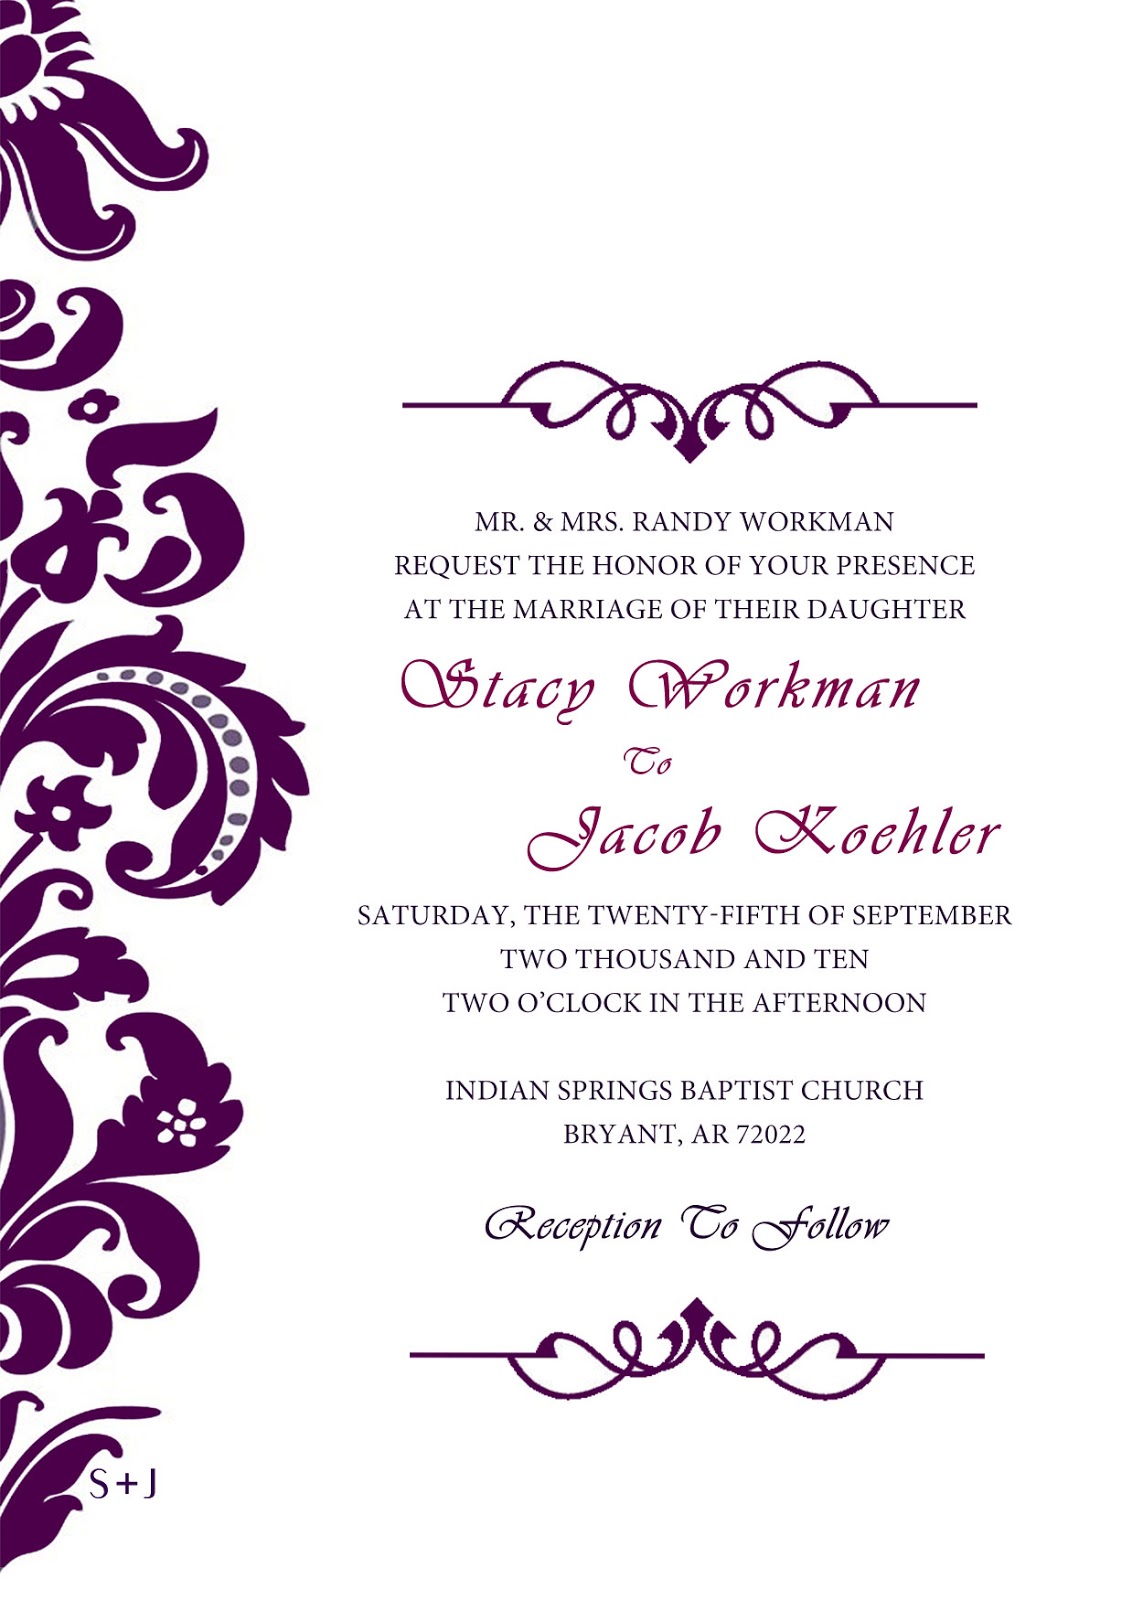 Destination Wedding Invitations: wedding invitation designs